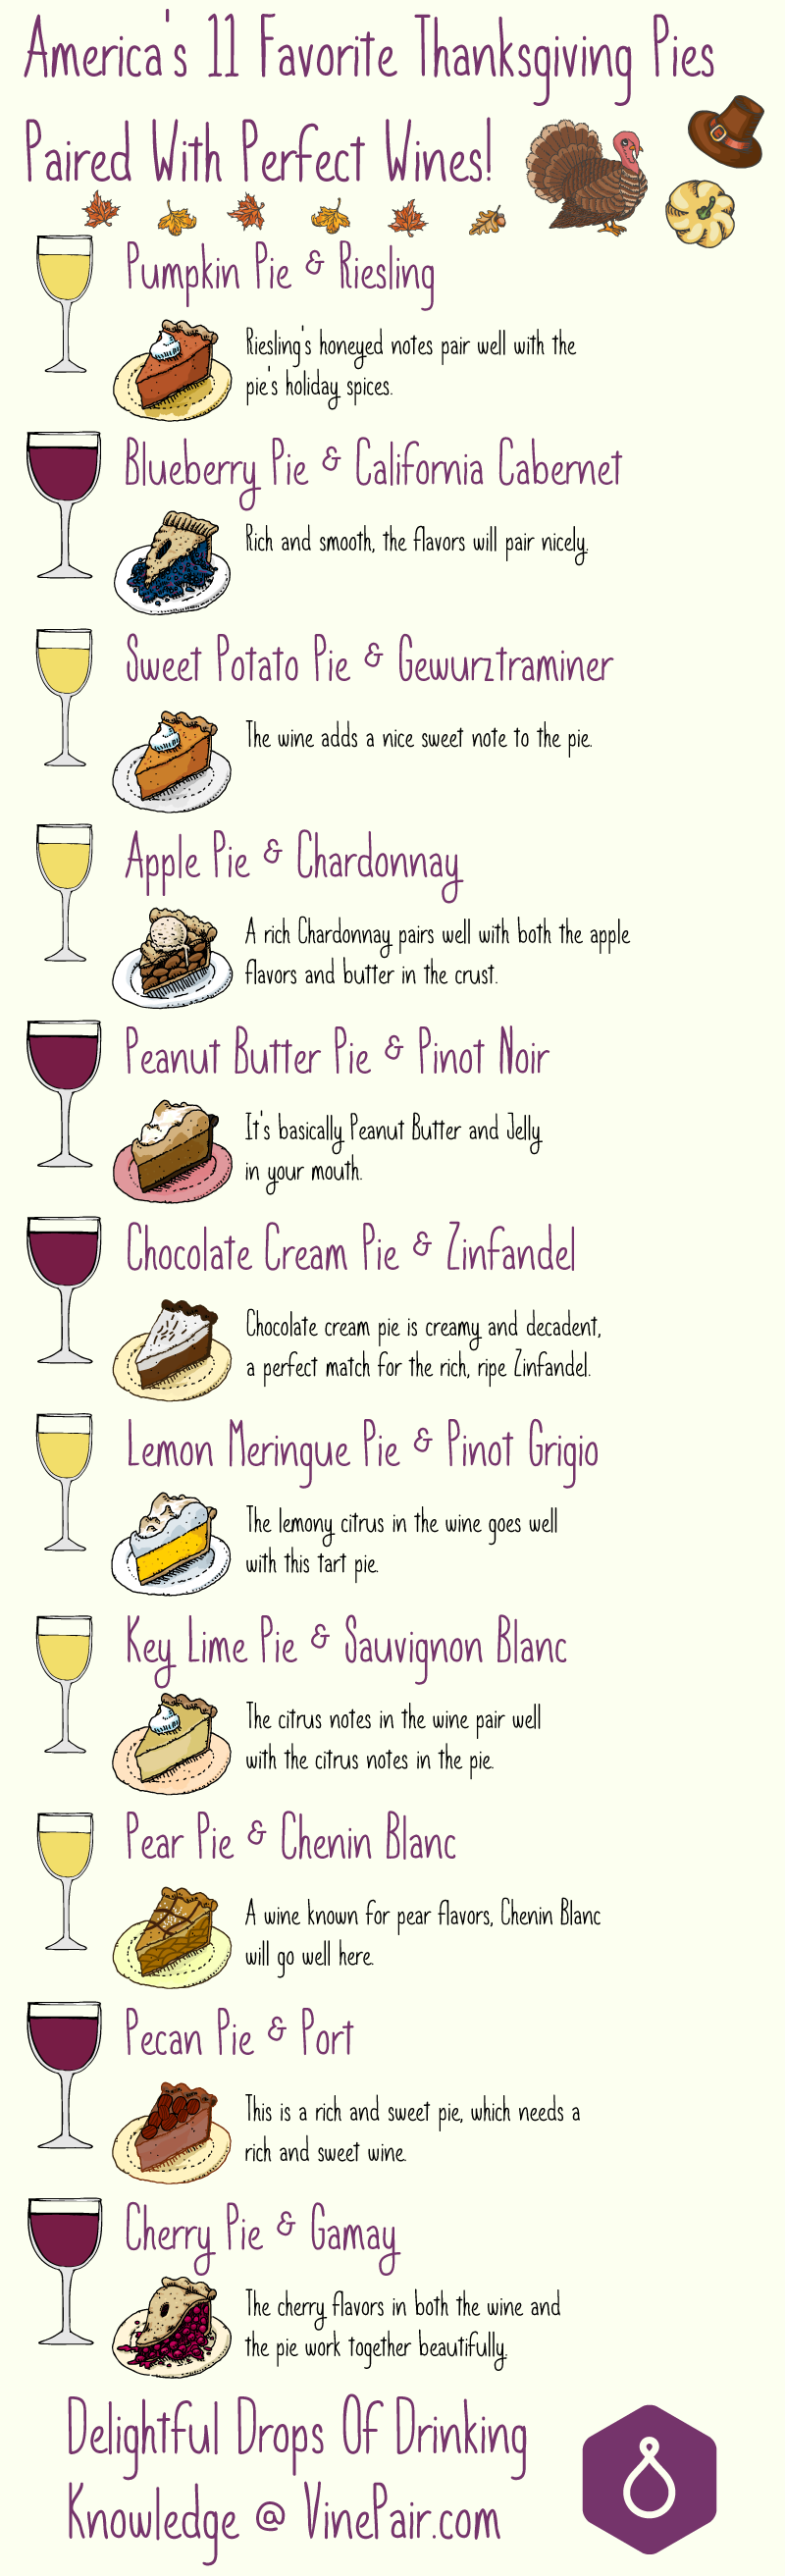 Wine Pairings For America's 11 Favorite Thanksgiving Pies